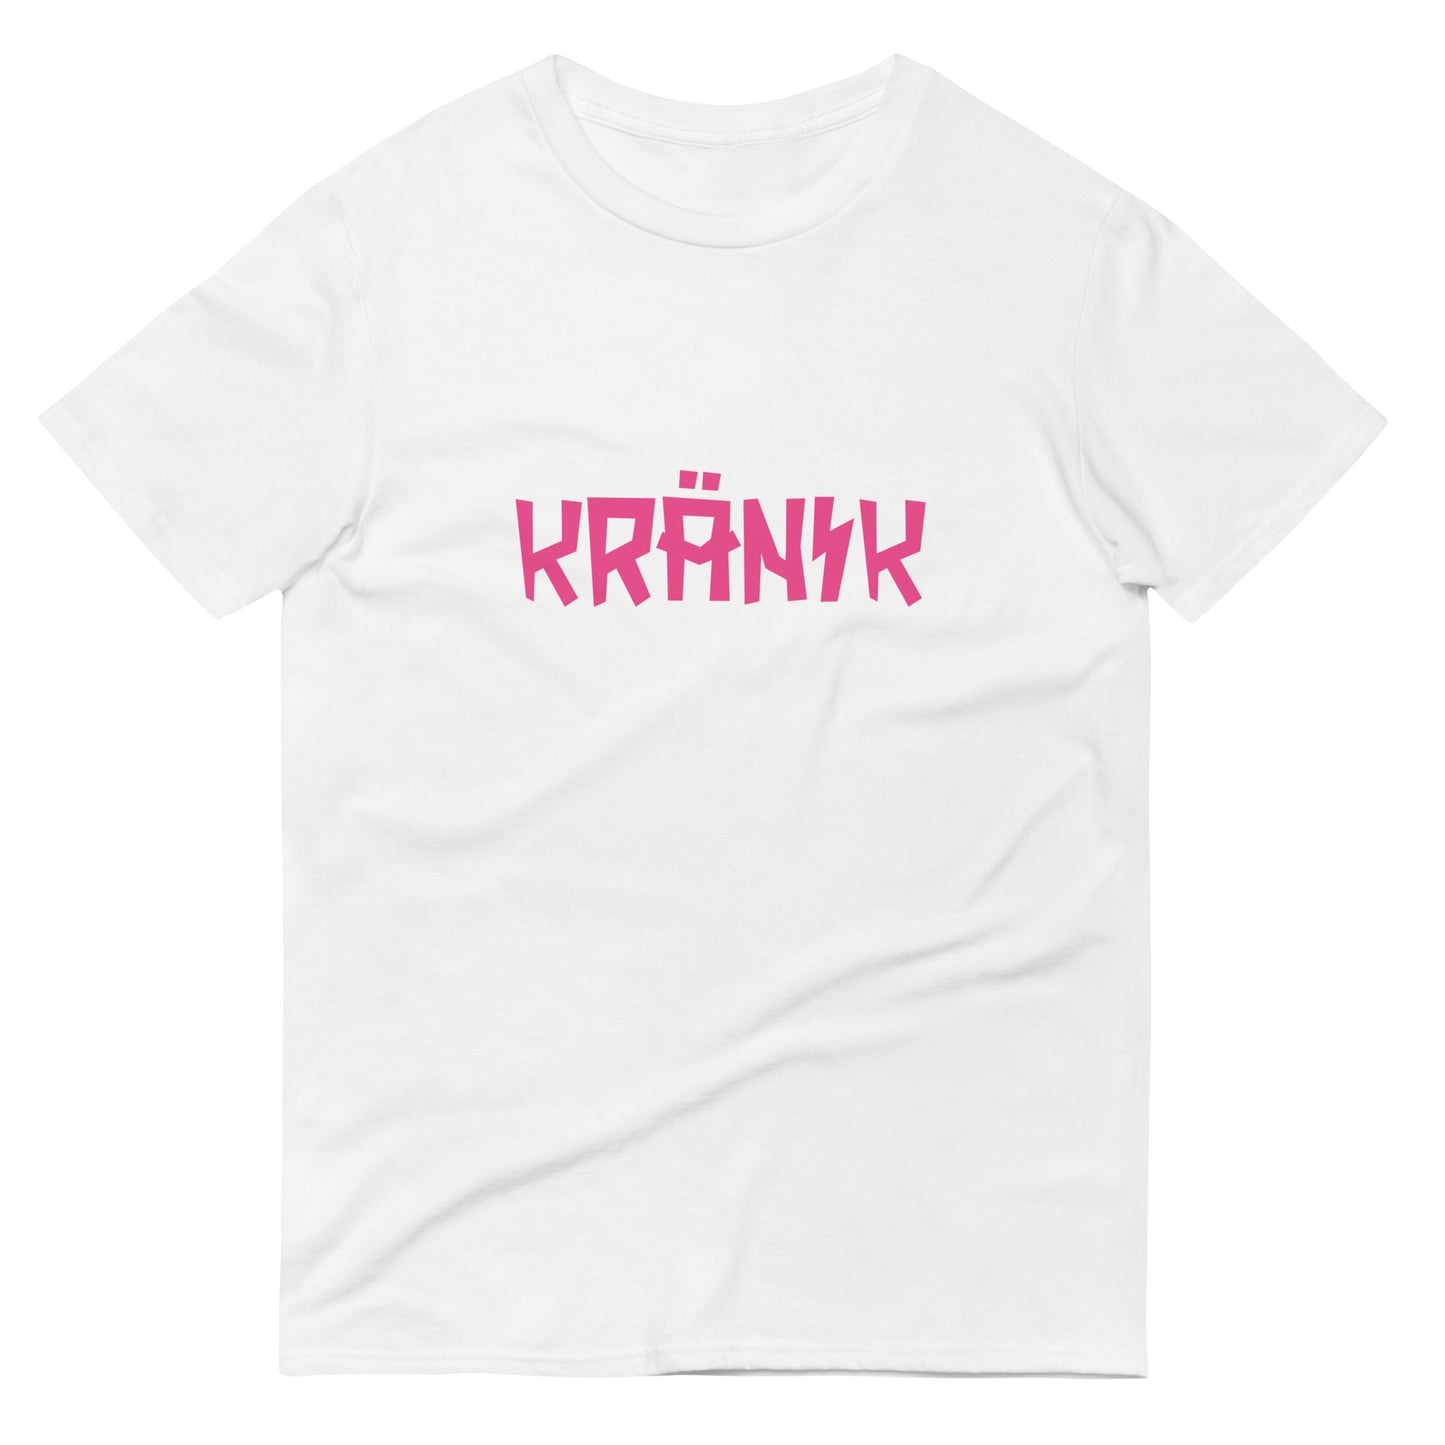 (2) Kranik Shirt - Summer Collection - Short-Sleeve Shirt -Kranik Brand